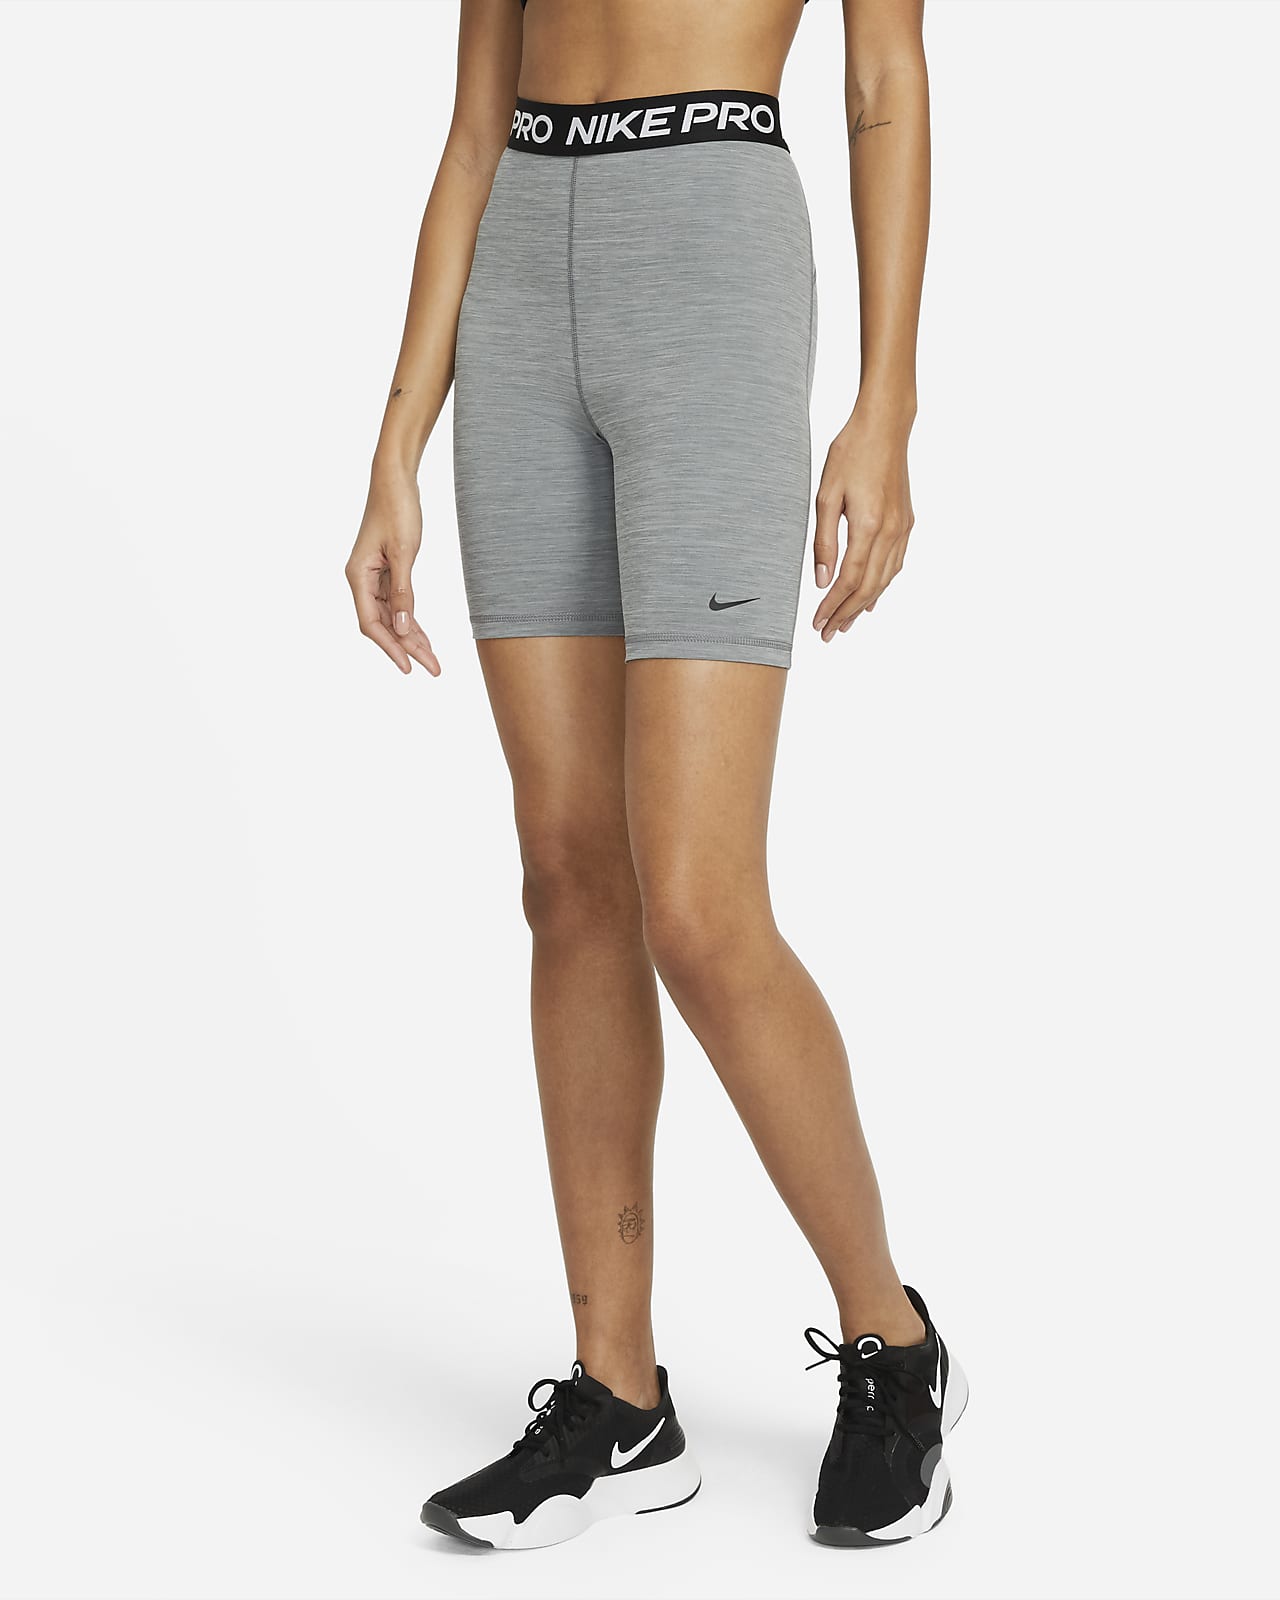 Shorts de 18 cm de tiro alto para mujer Nike Pro 365